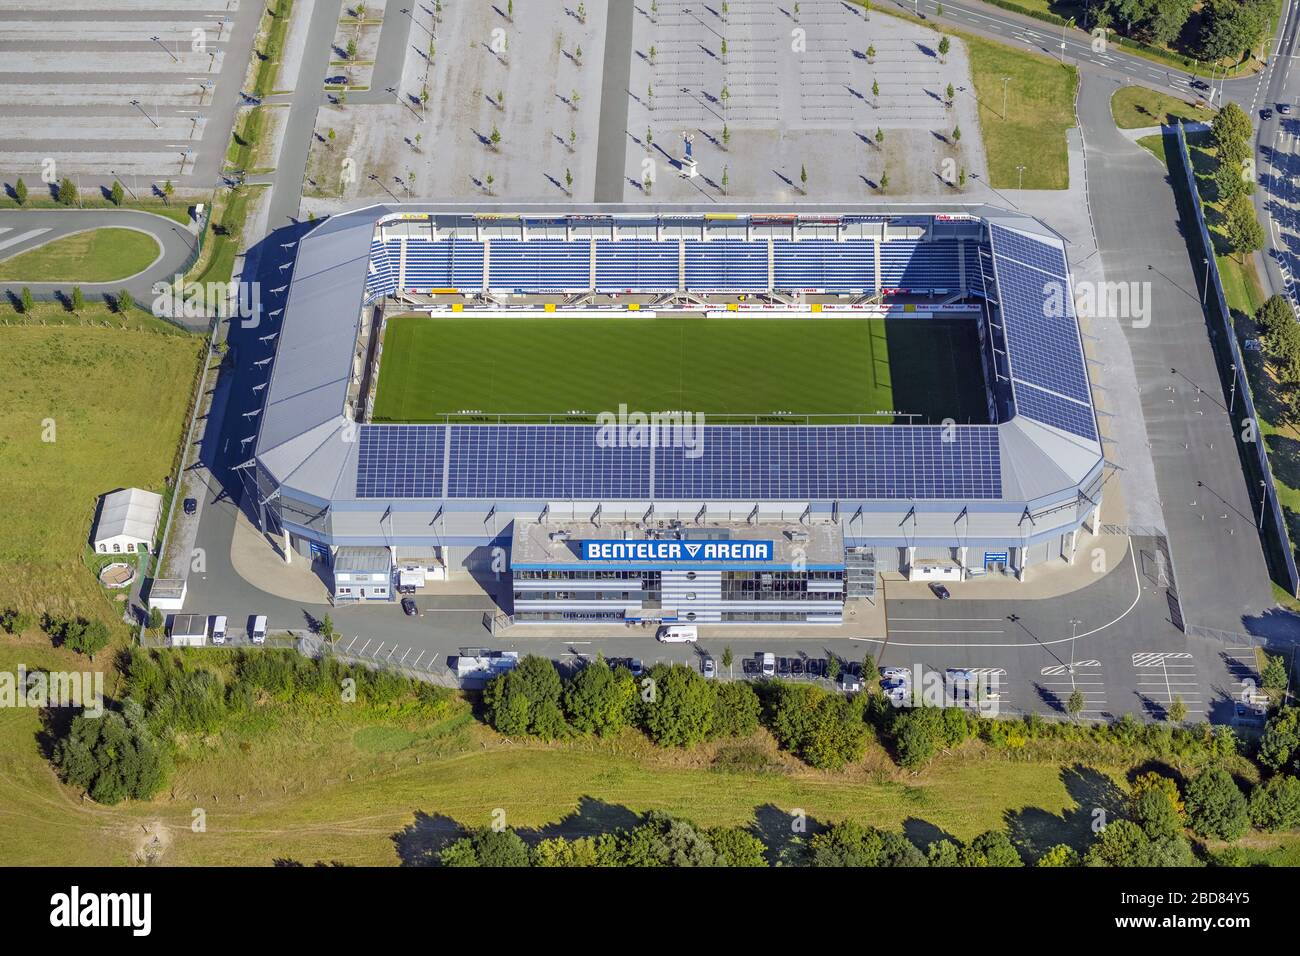 , stadium Benteler Arena of Paderborn, 05.09.2013, aerial view, Germany, North Rhine-Westphalia, East Westphalia, Paderborn Stock Photo